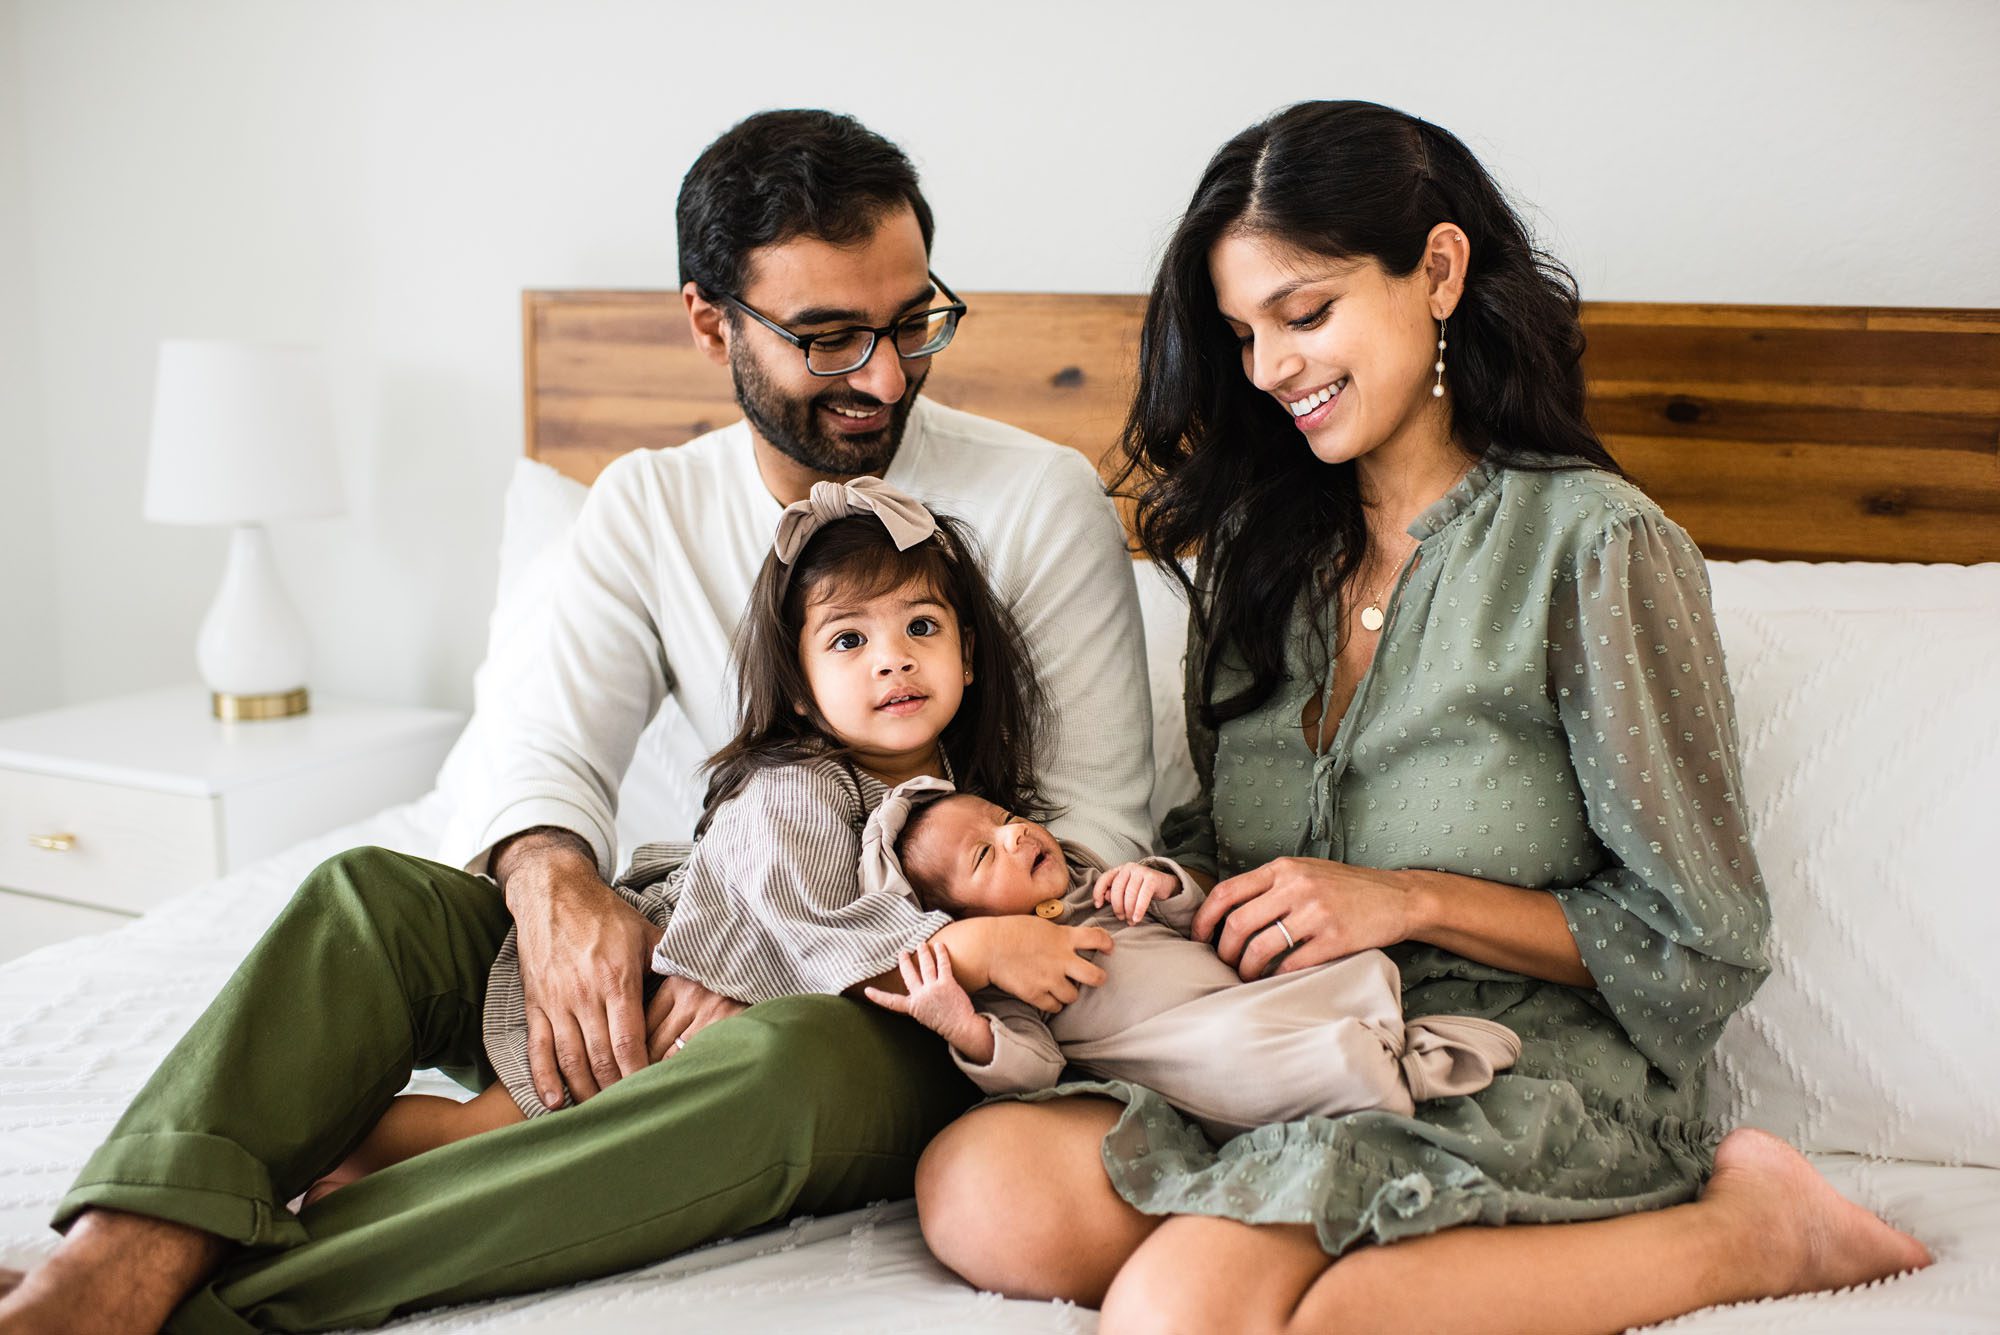 Family sitting together on bed with newborn baby, San Antonio lifestyle newborn photographer